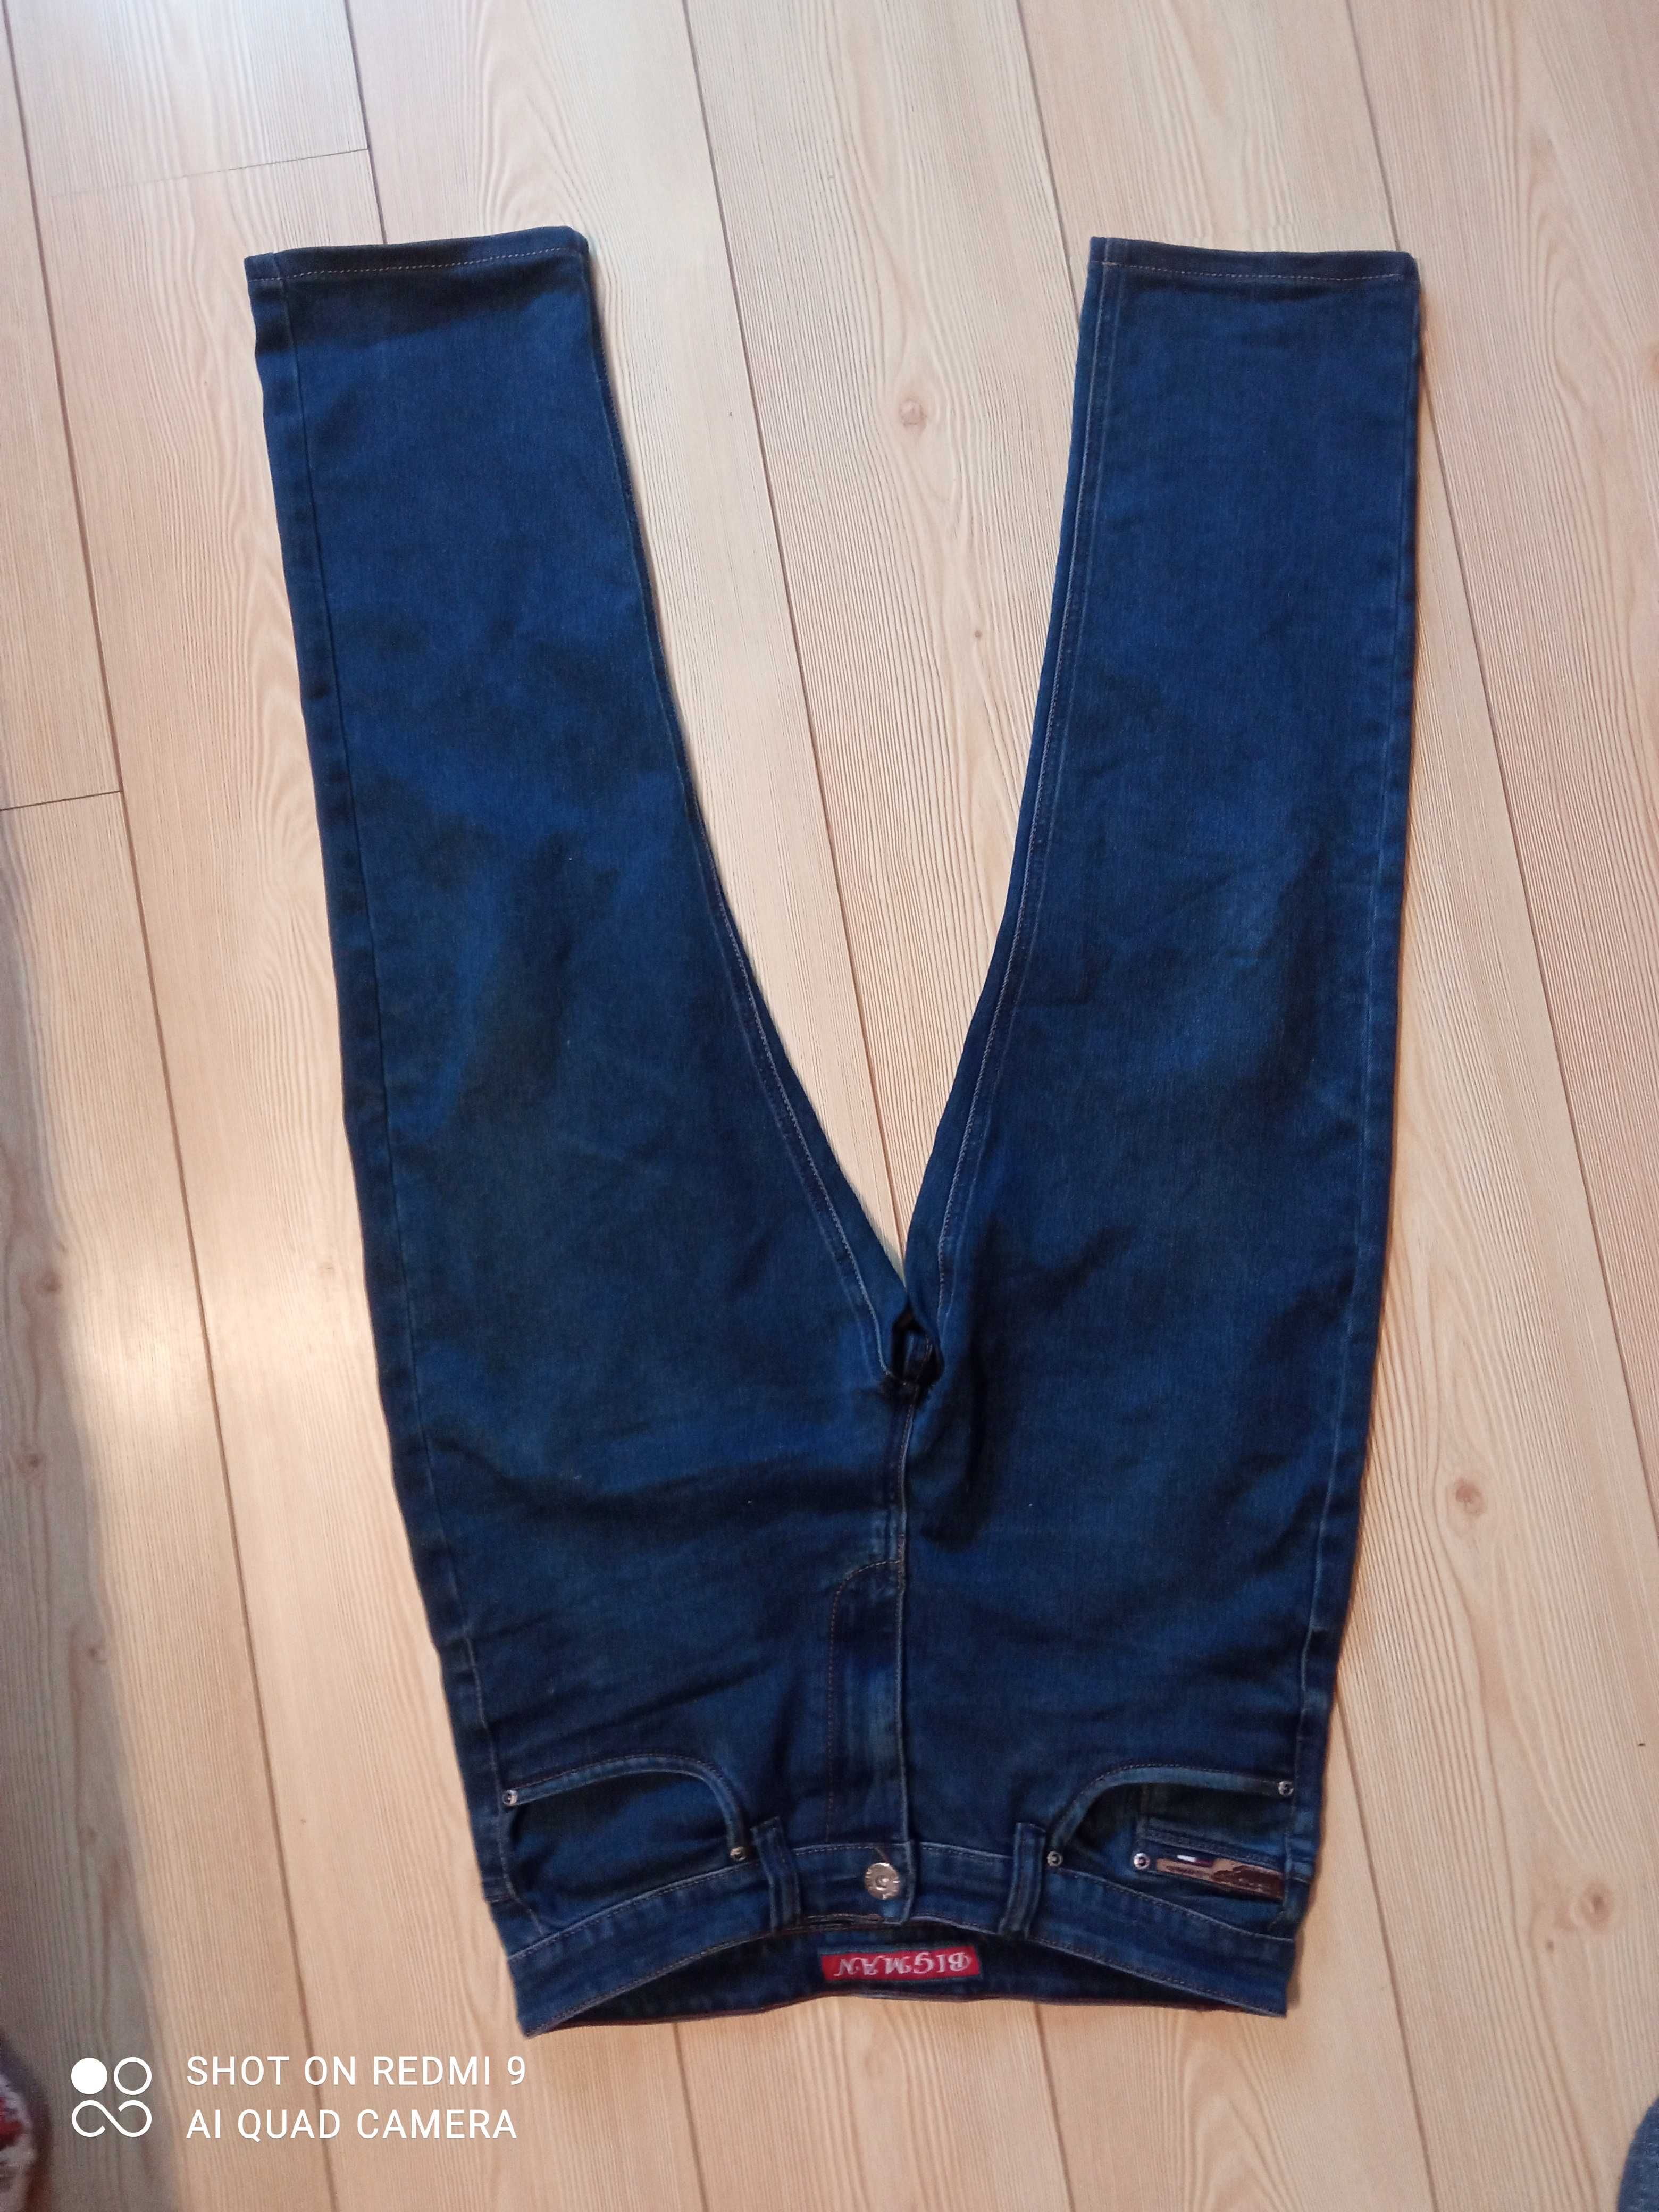 Spodnie męskie, dżinsy z elastanem, r. 32/34 pas ok 86 cm